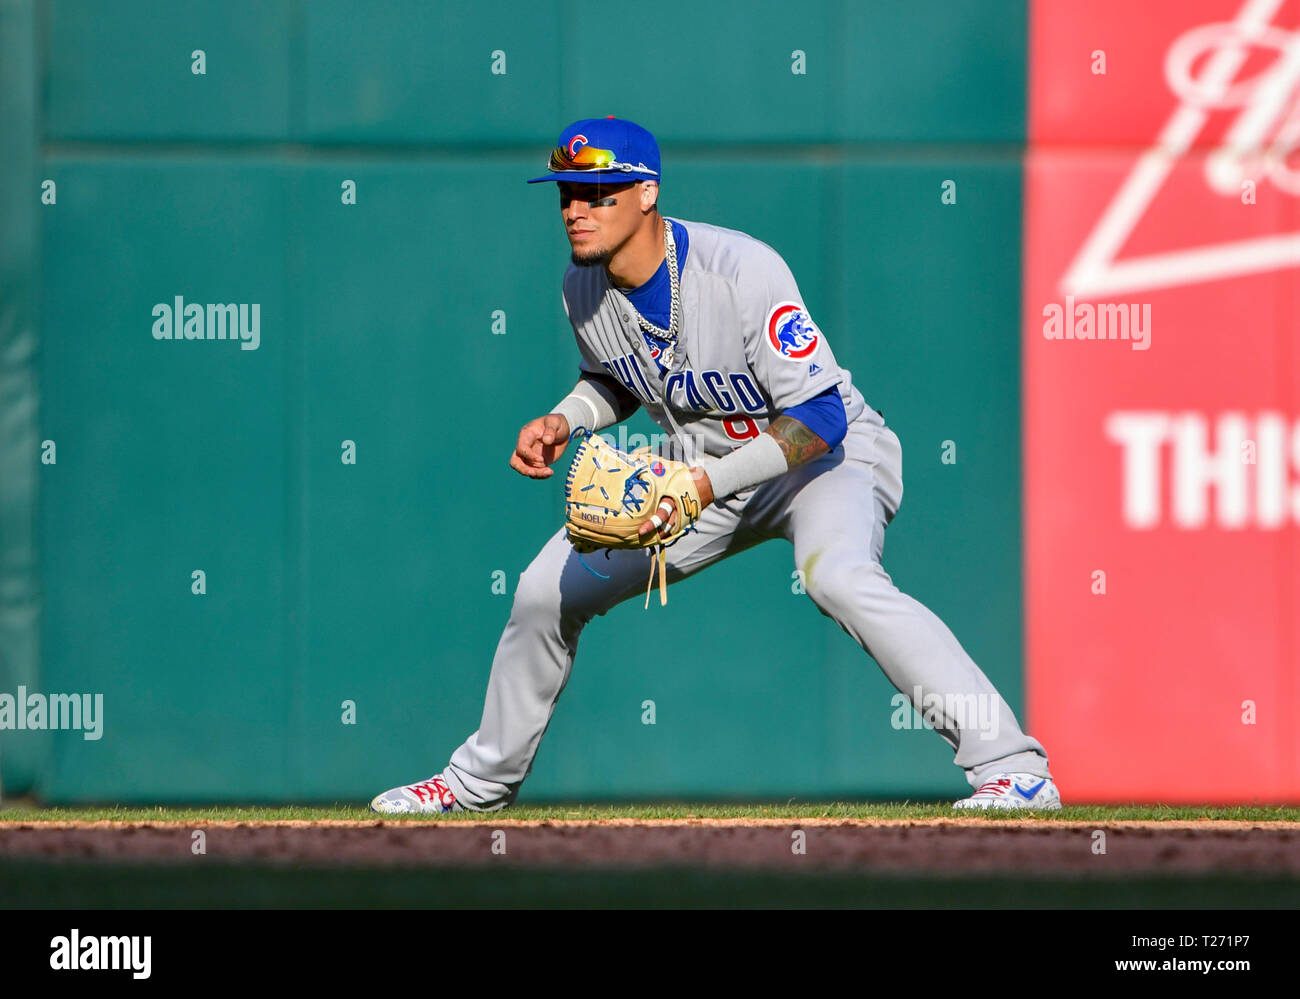 Mar 28, 2019: Chicago Cubs shortstop Javier Baez #9 during an